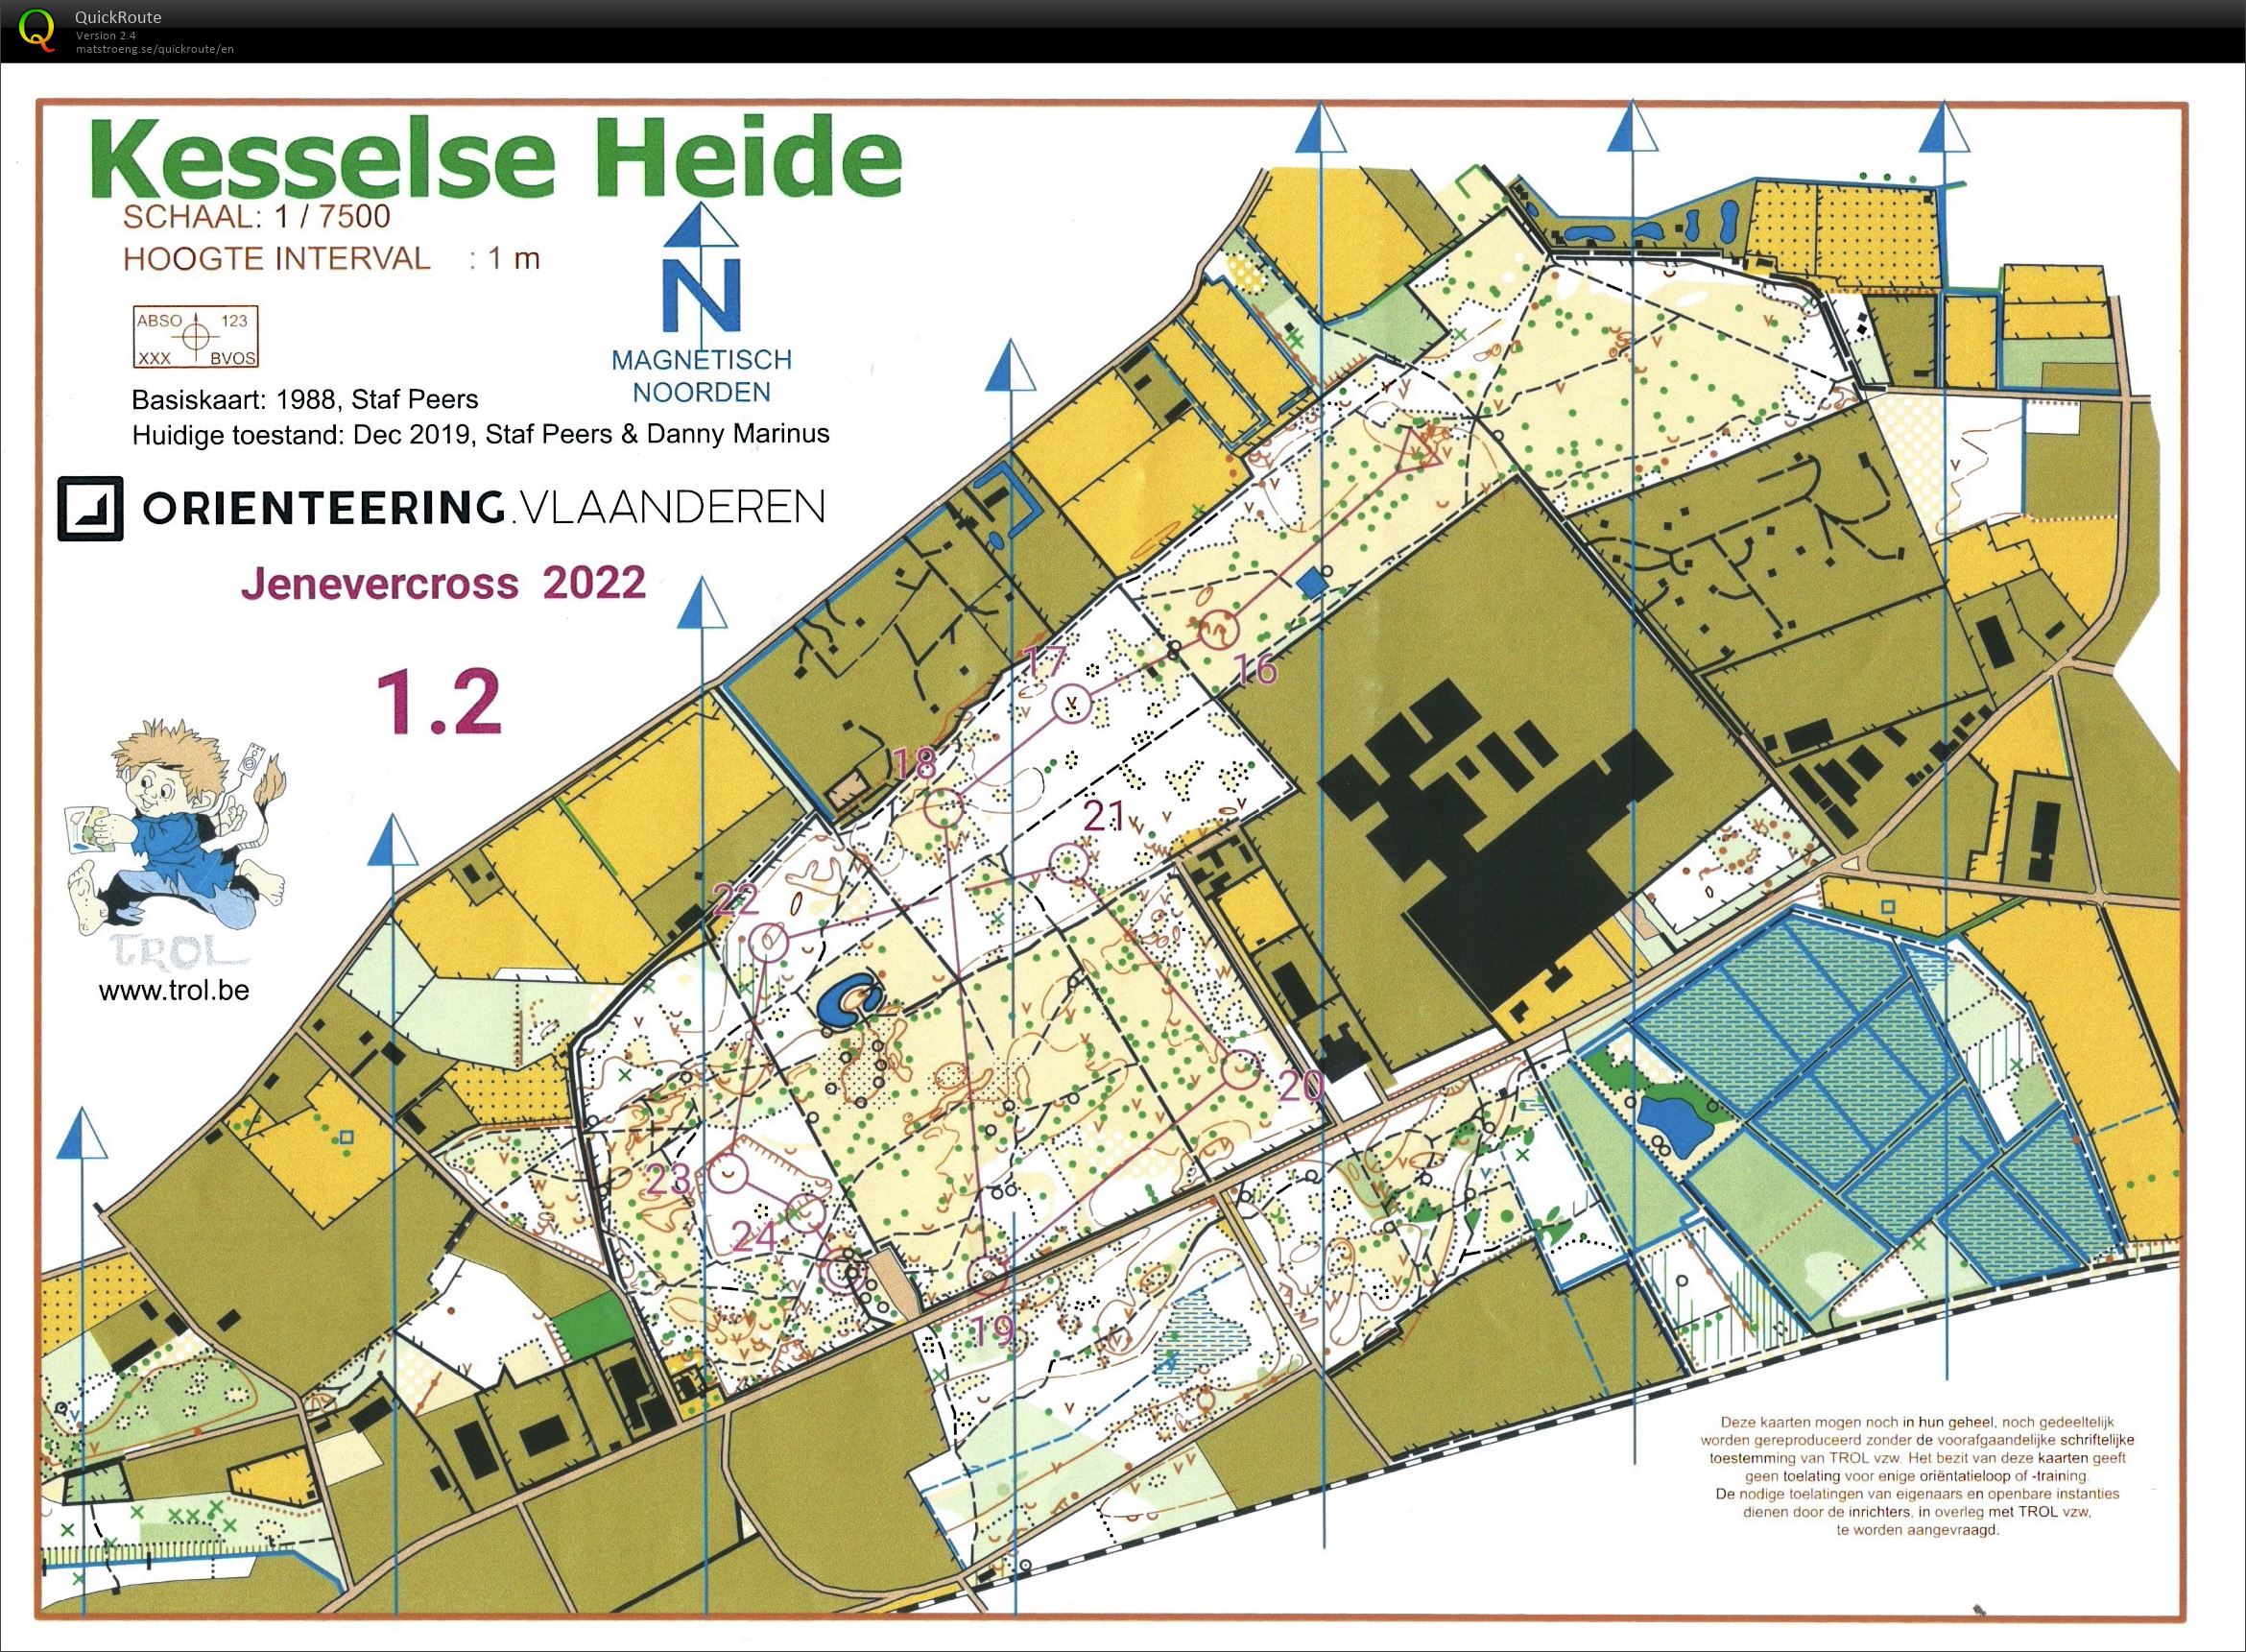 Jenevercross 2022 - Kesselse Heide - 1.2 (07-01-2022)